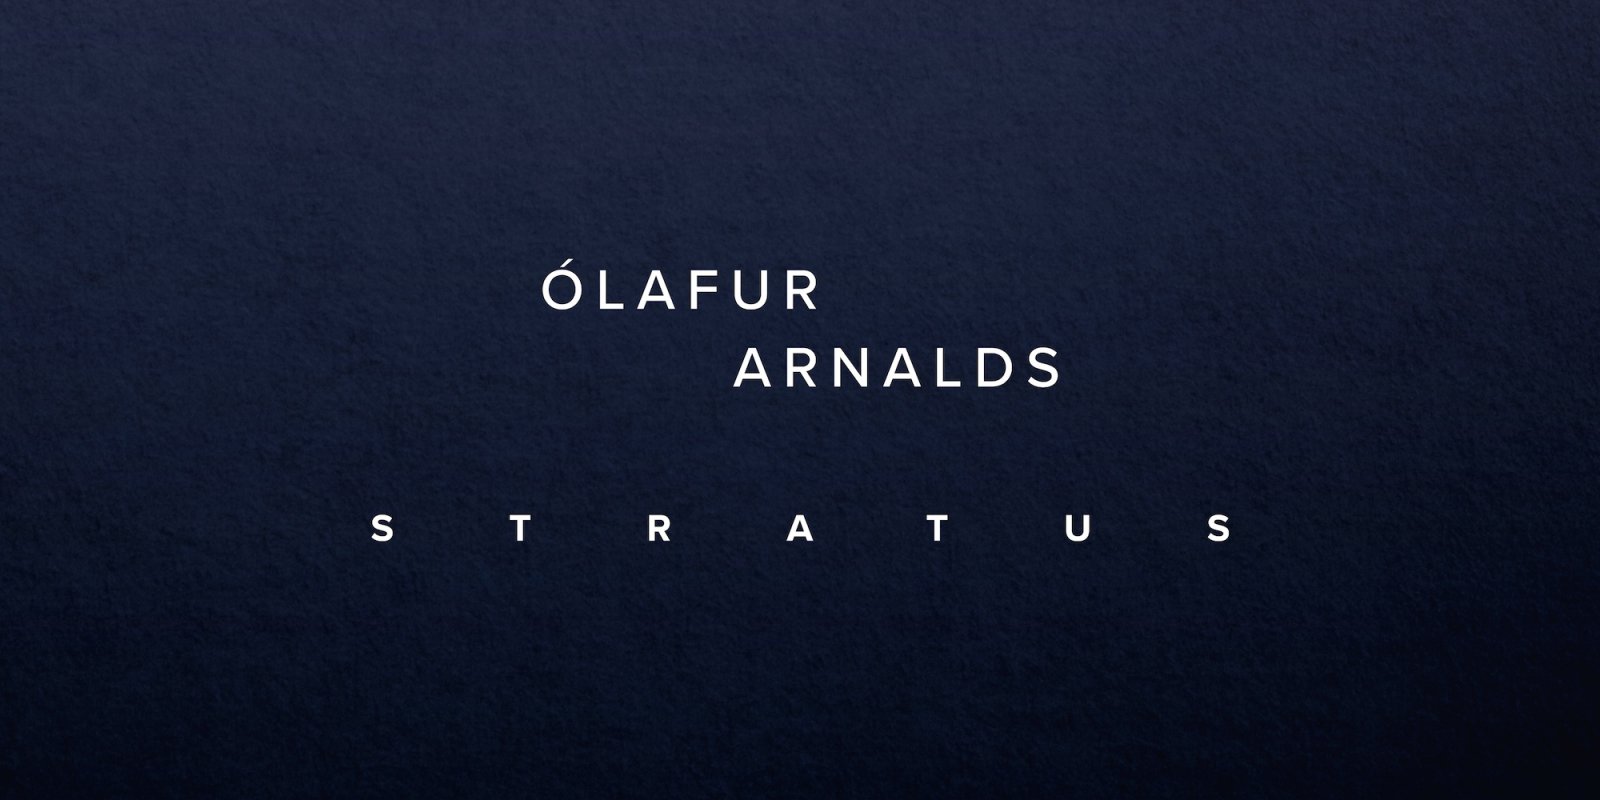 Mer information om "Spitfire Audio reunites with BAFTA-winning Icelandic composer and producer to reimagine piano as ÓLAFUR ARNALDS STRATUS sample instrument"